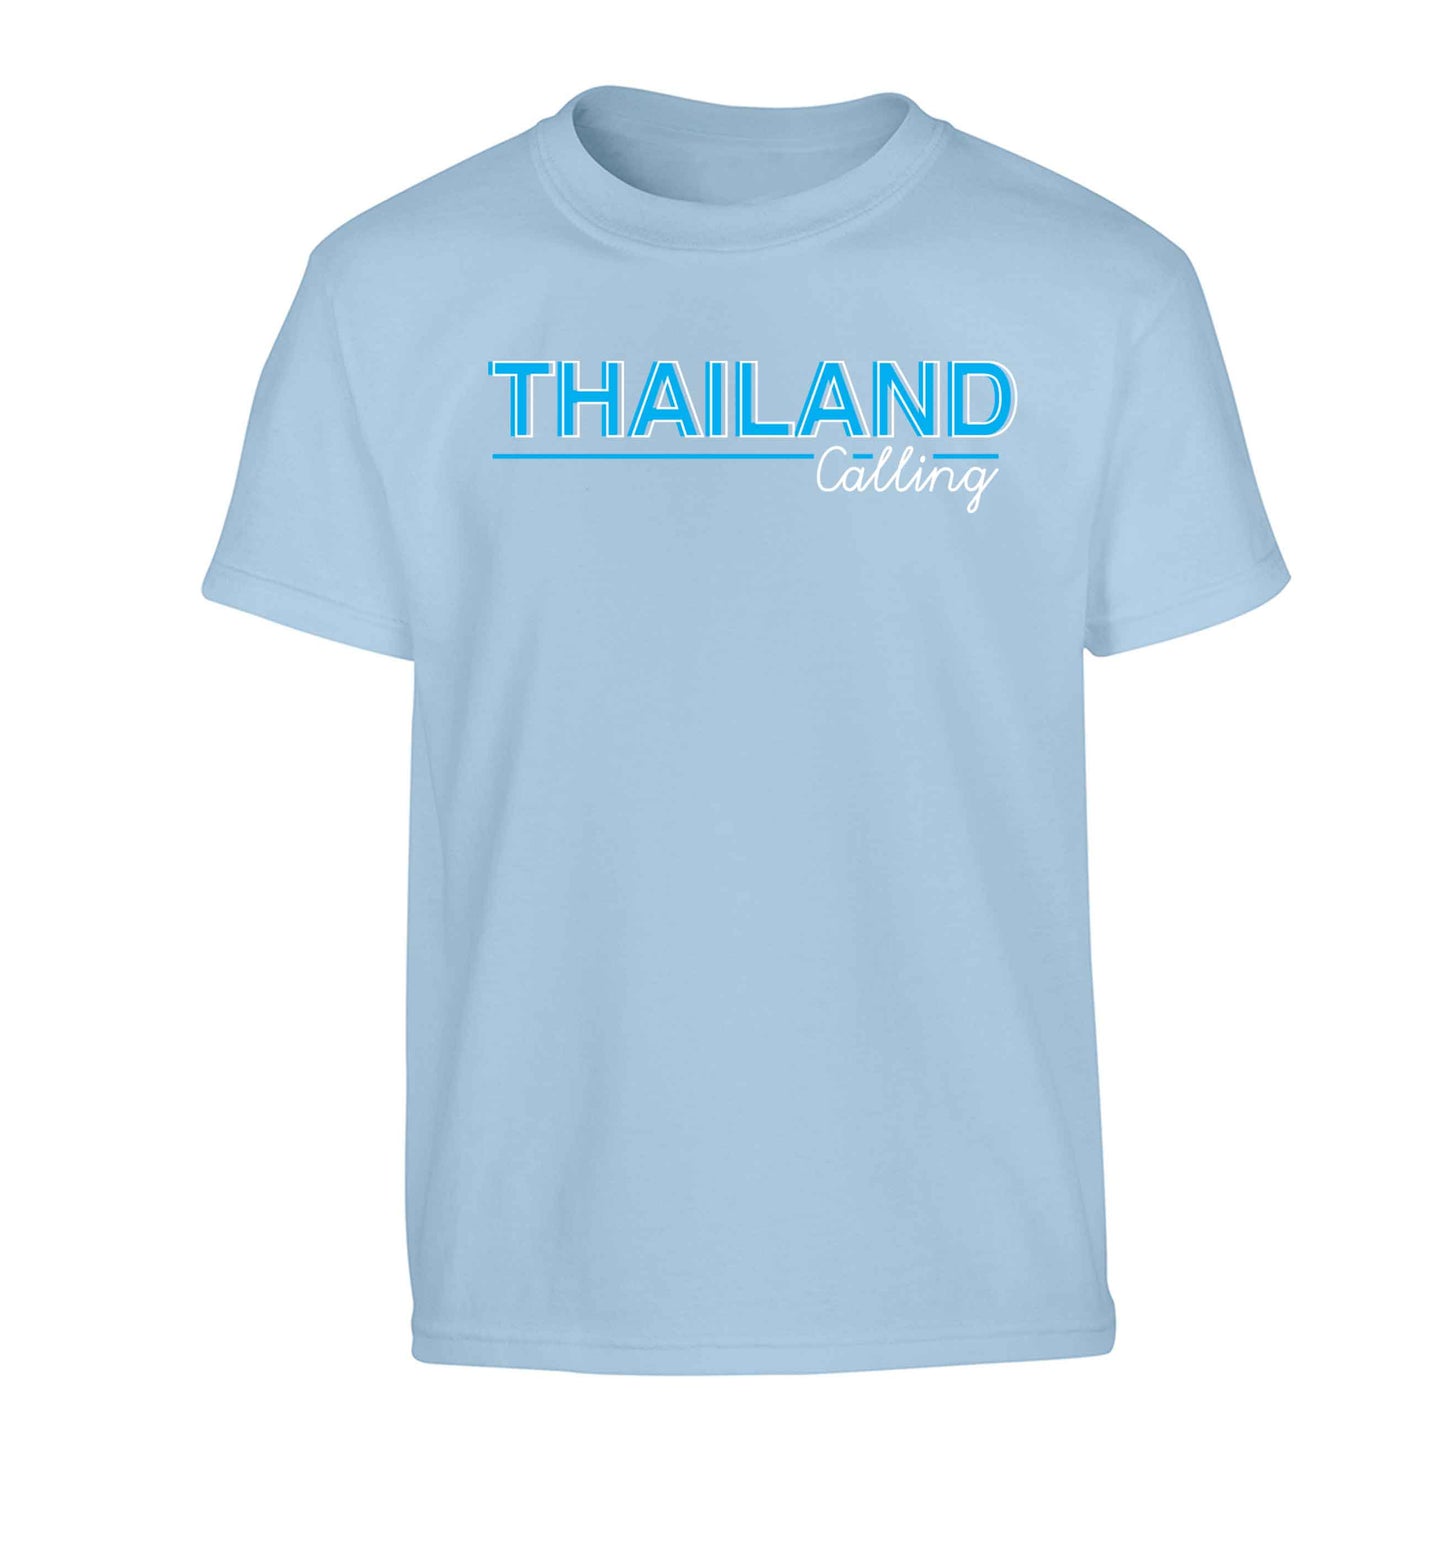 Thailand calling Children's light blue Tshirt 12-13 Years